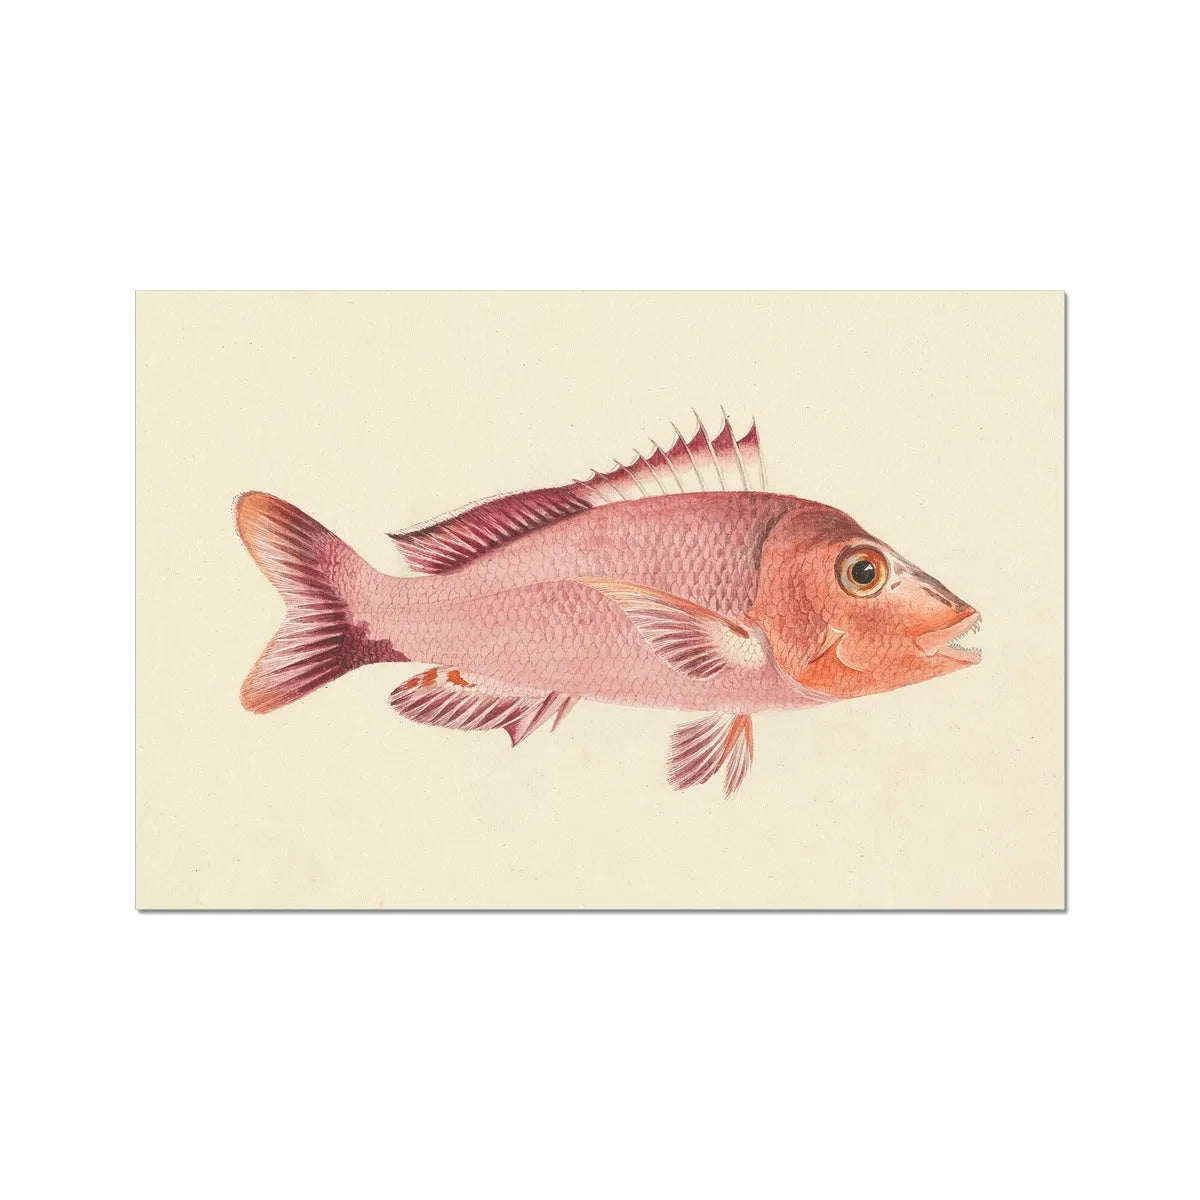 That Fish - Luigi Balugani Fine Art Print - 24’x16’ - Posters Prints & Visual Artwork - Aesthetic Art